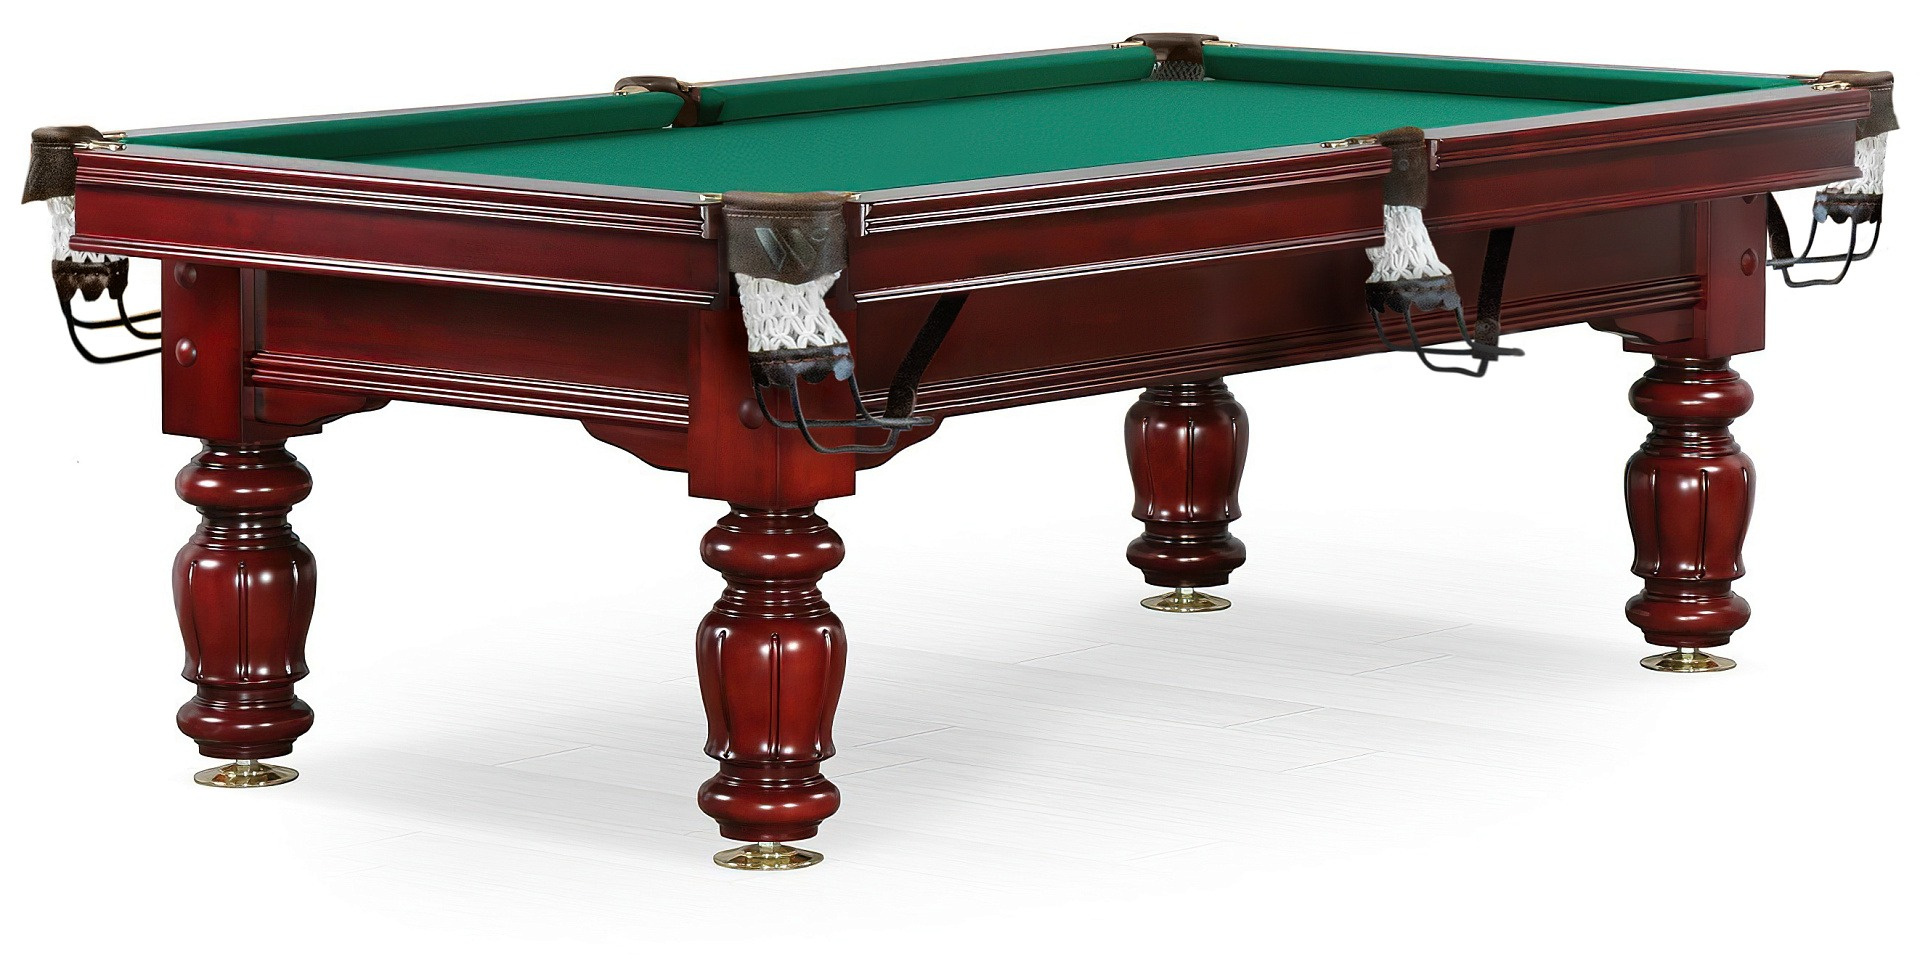 Weekend Billiard Classic II - 8 футов (махагон) из каталога игровых столов в Санкт-Петербурге по цене 149955 ₽